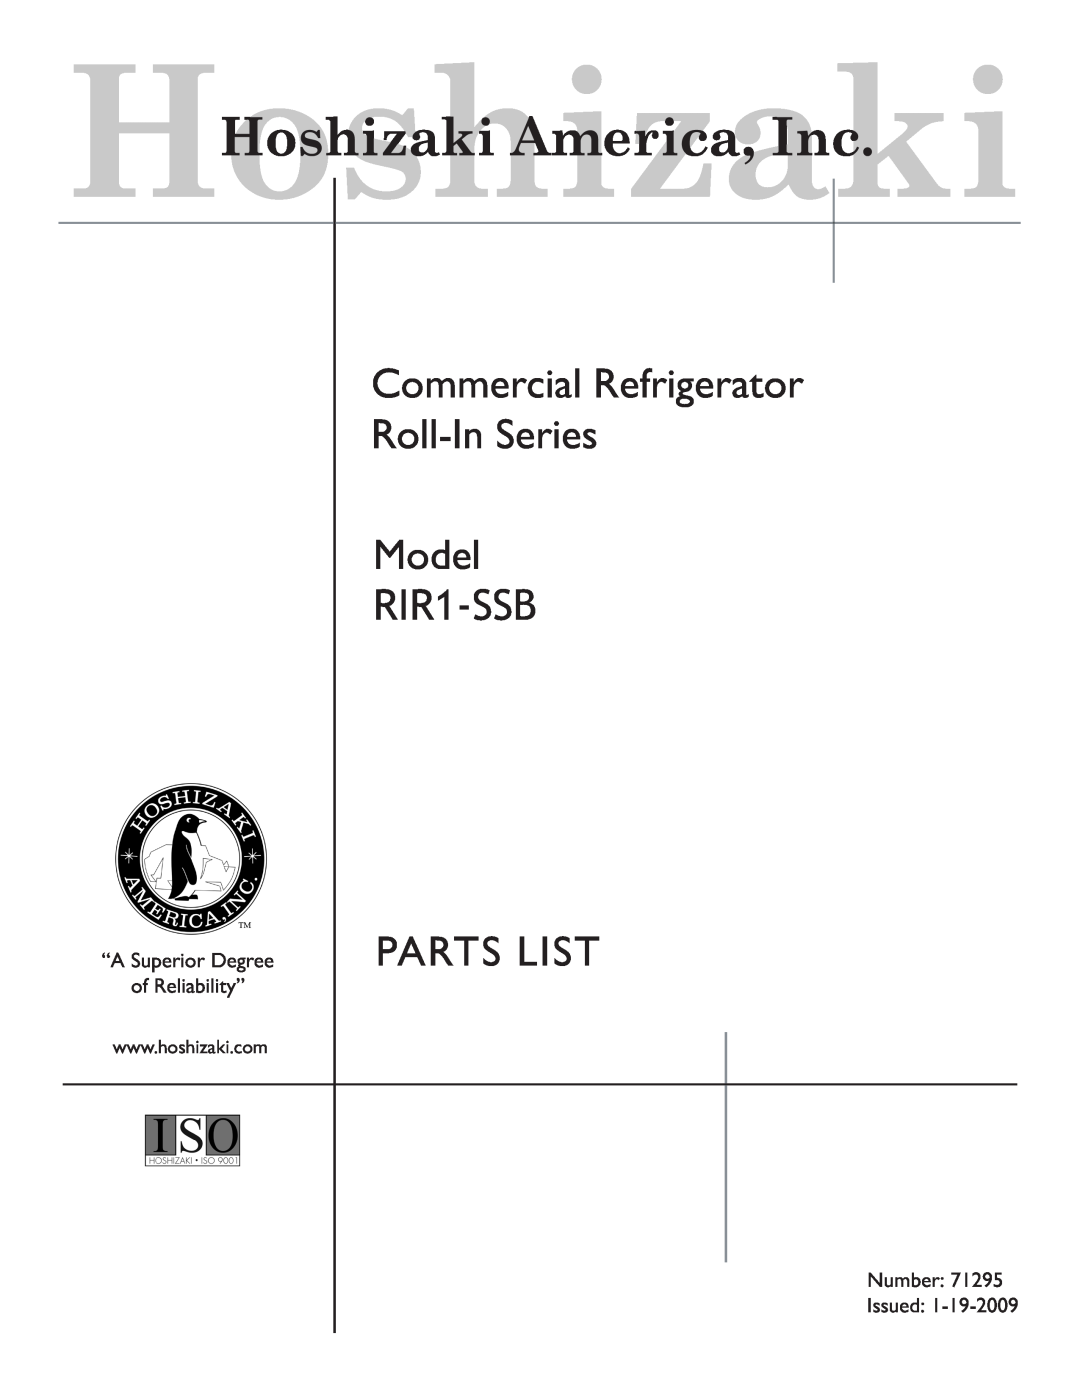 Hoshizaki RIR1-SSB manual Commercial Refrigerator Roll-In Series Model, Parts List, HoshizakiHoshizaki America, Inc 